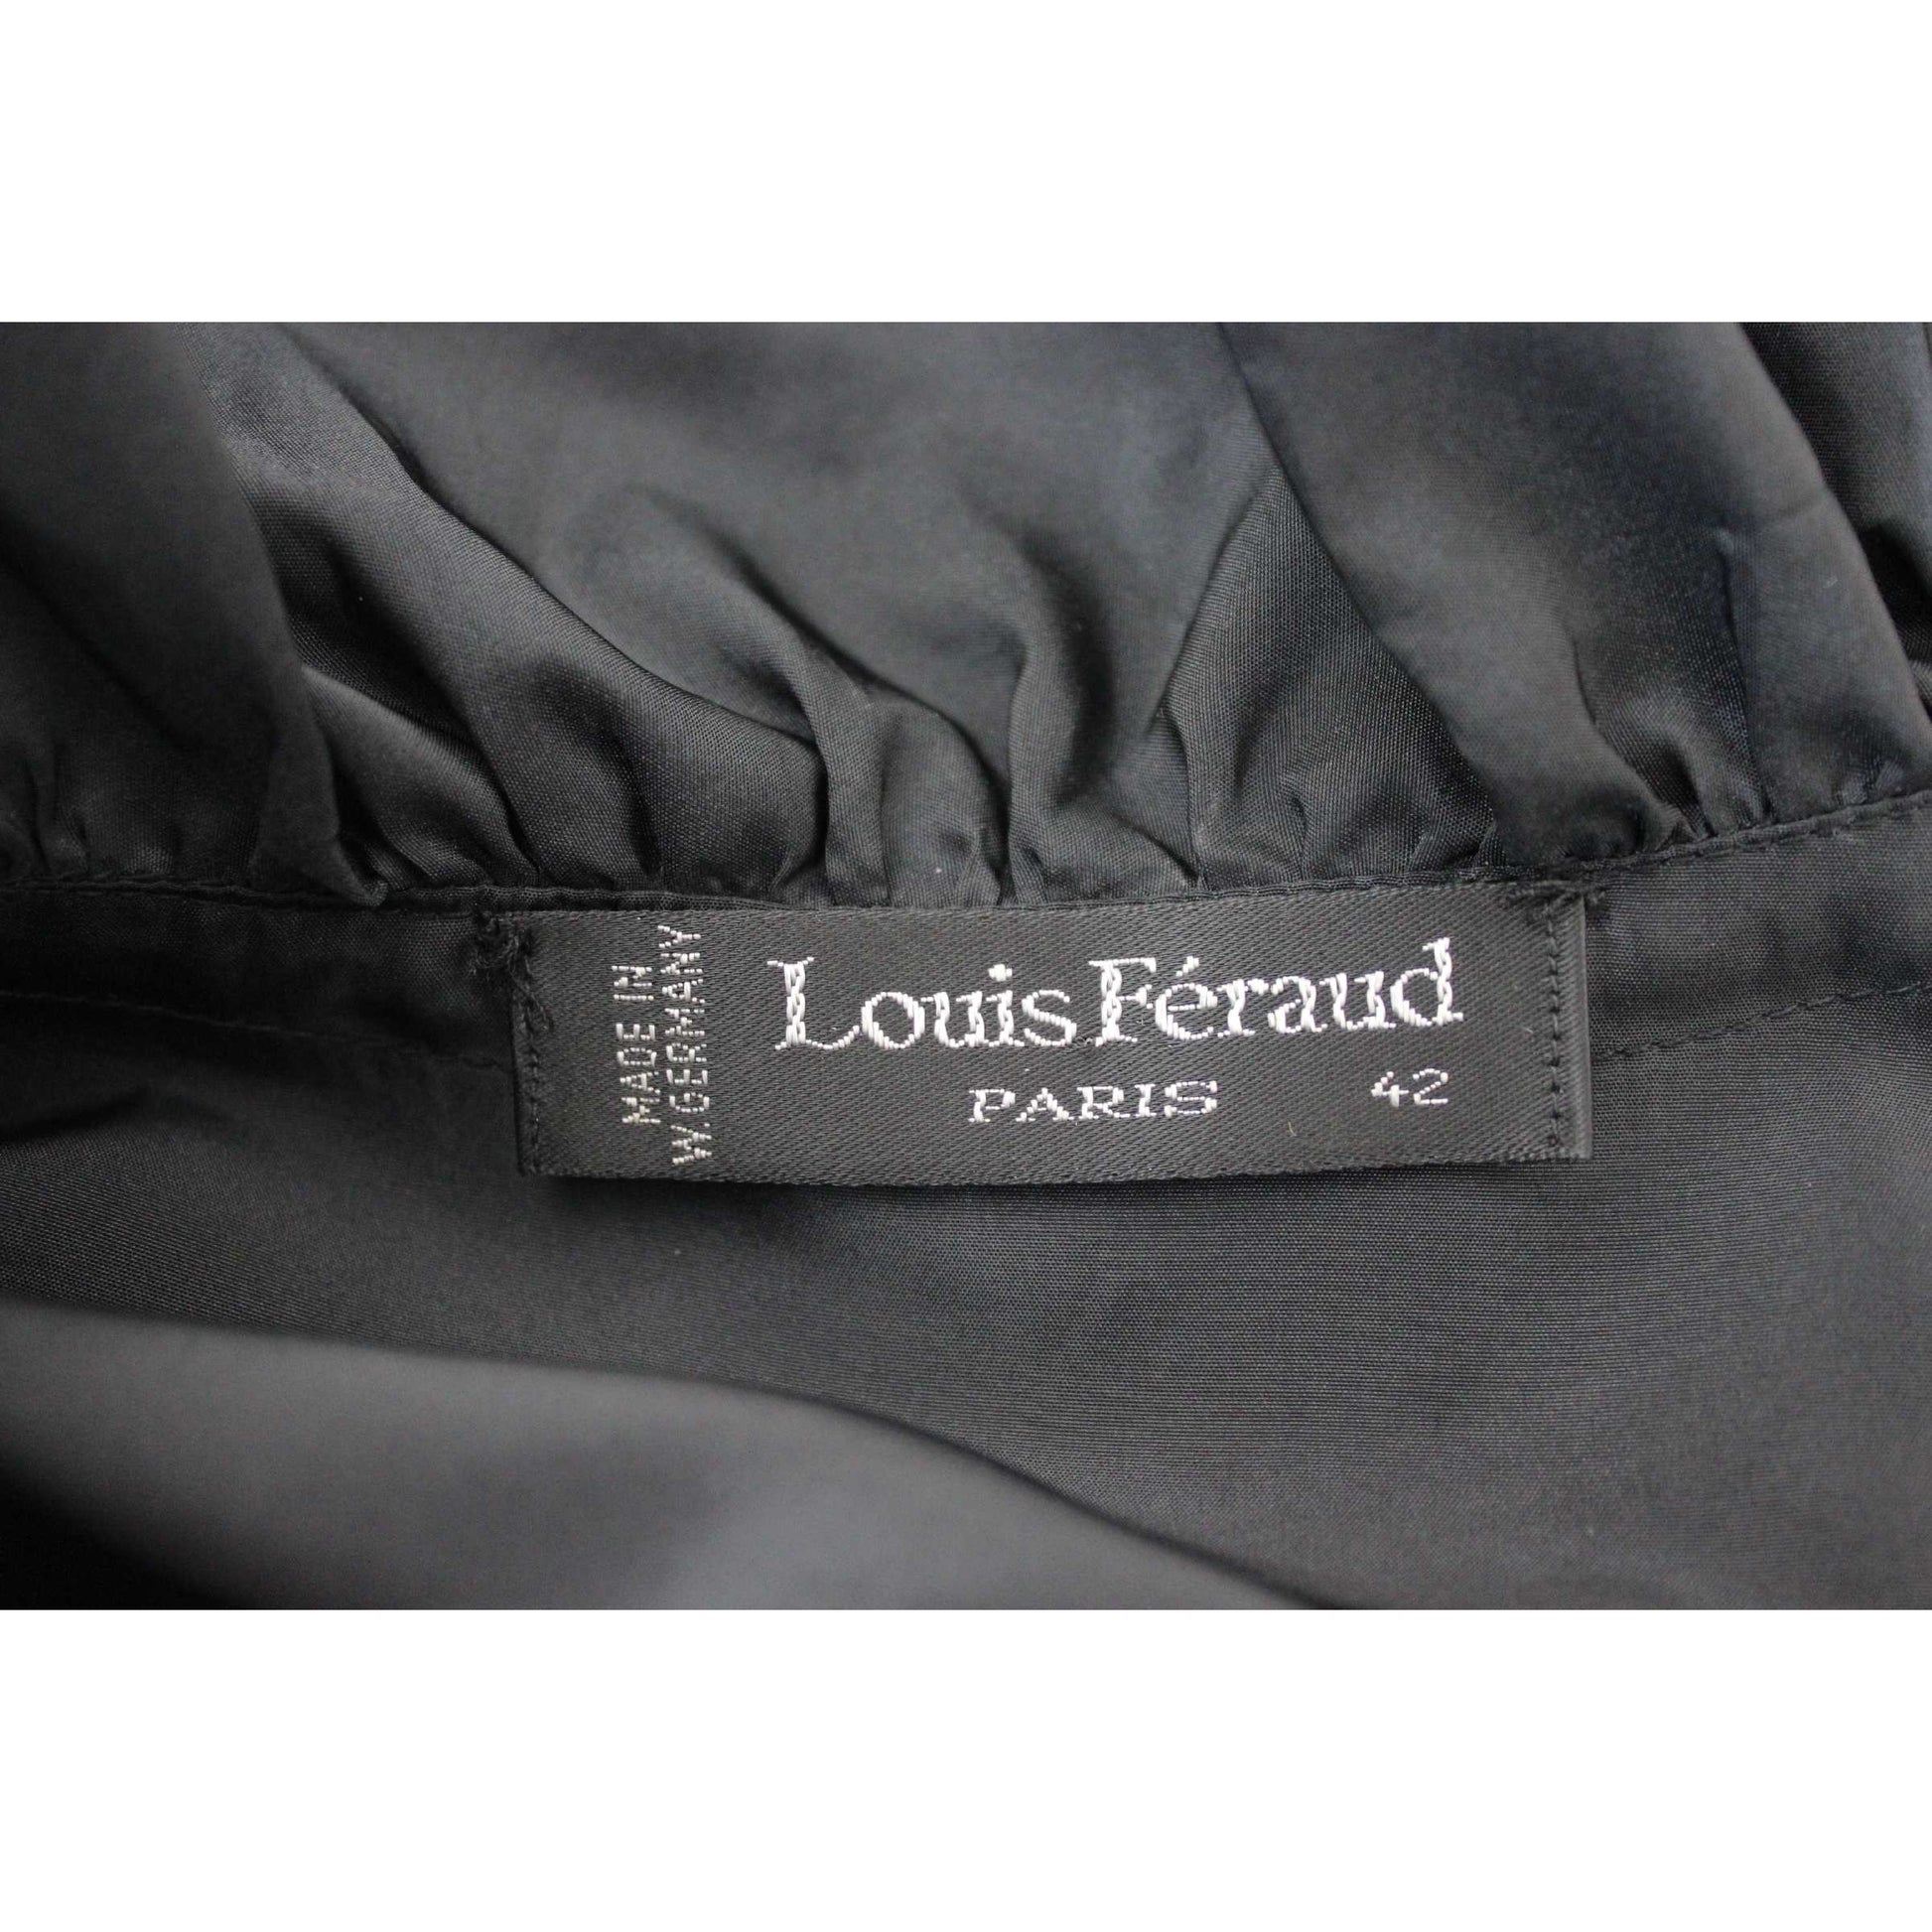 Louis Feraud Clothes Second Hand: Louis Feraud Clothes Online Store, Louis  Feraud Clothes Outlet/Sale UK